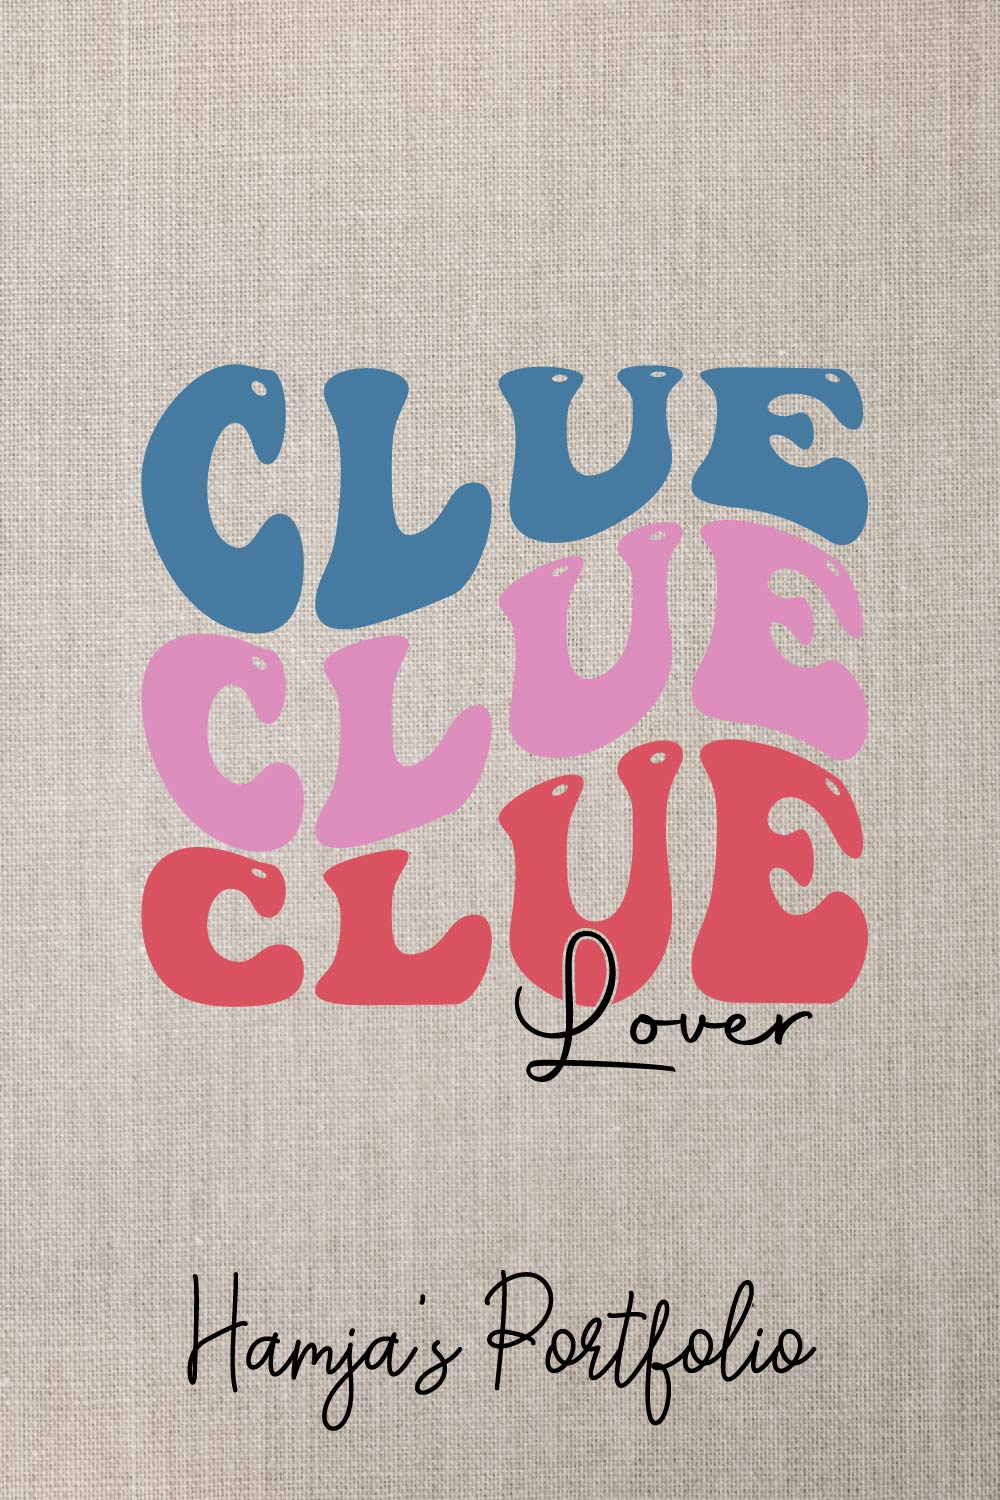 Clue Lover Vector Bundle svg pinterest preview image.